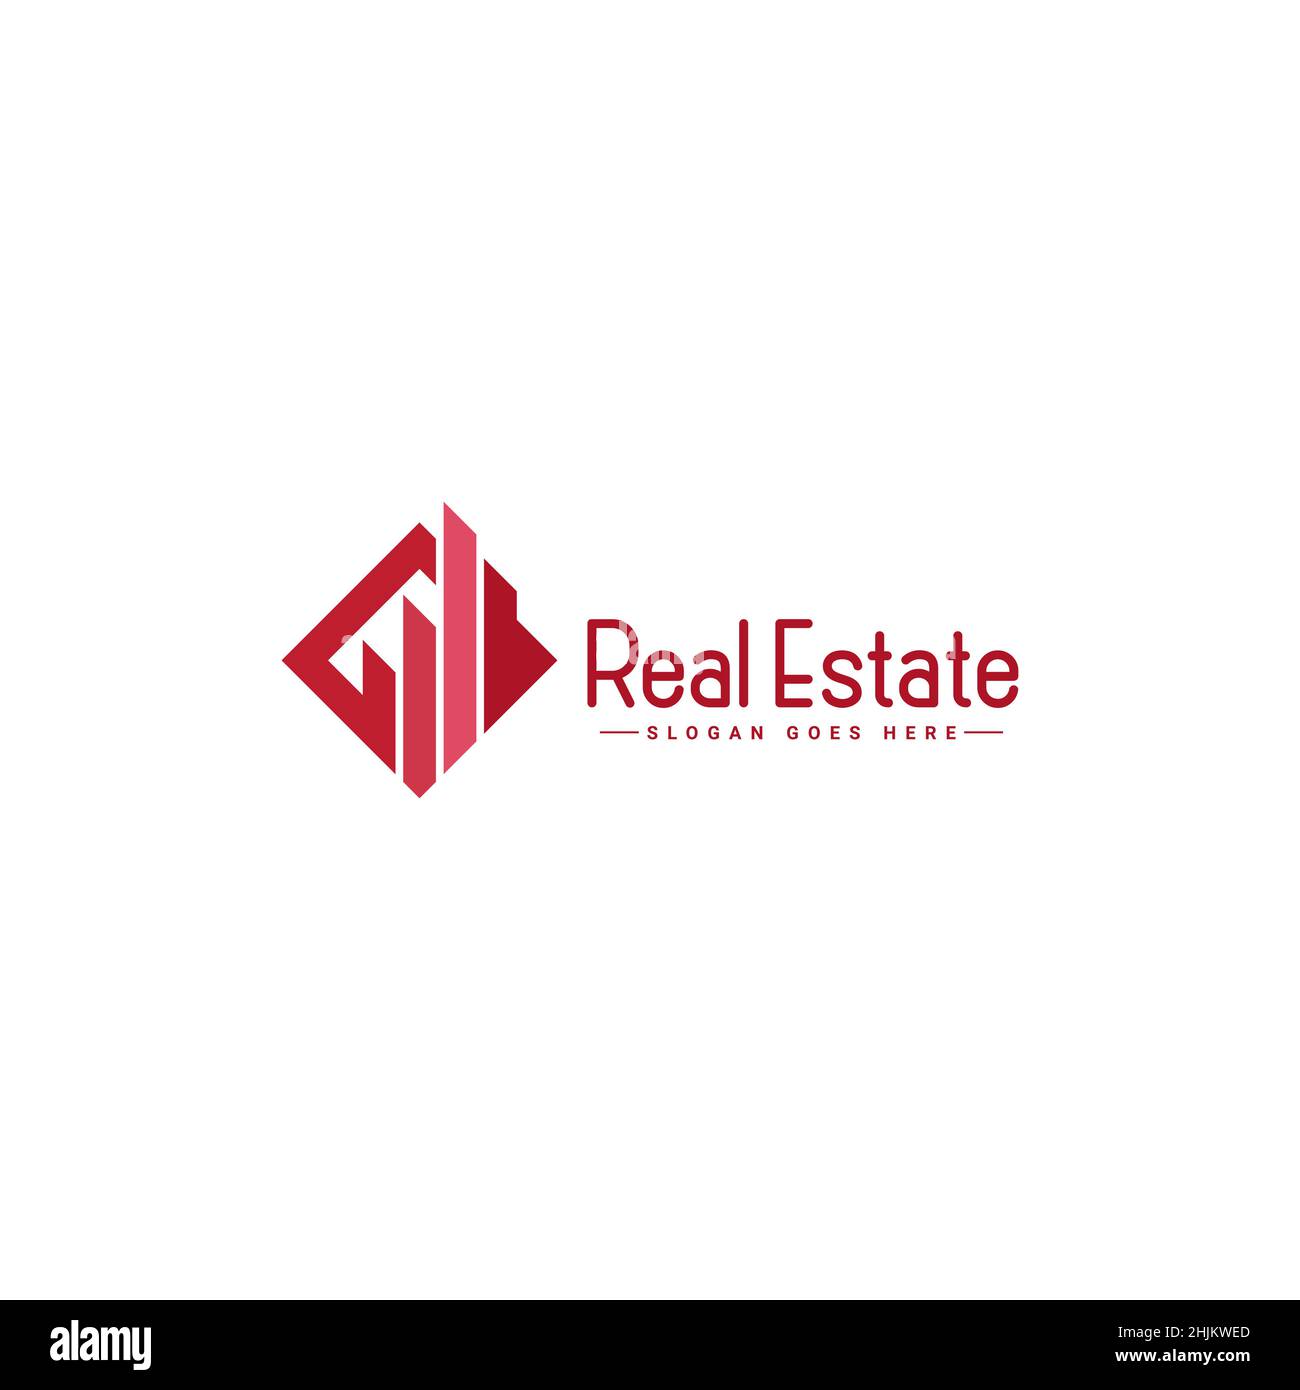 Real Estate Business Logo - Minimal Vector Logo Template für Immobilien-Geschäft Stock Vektor